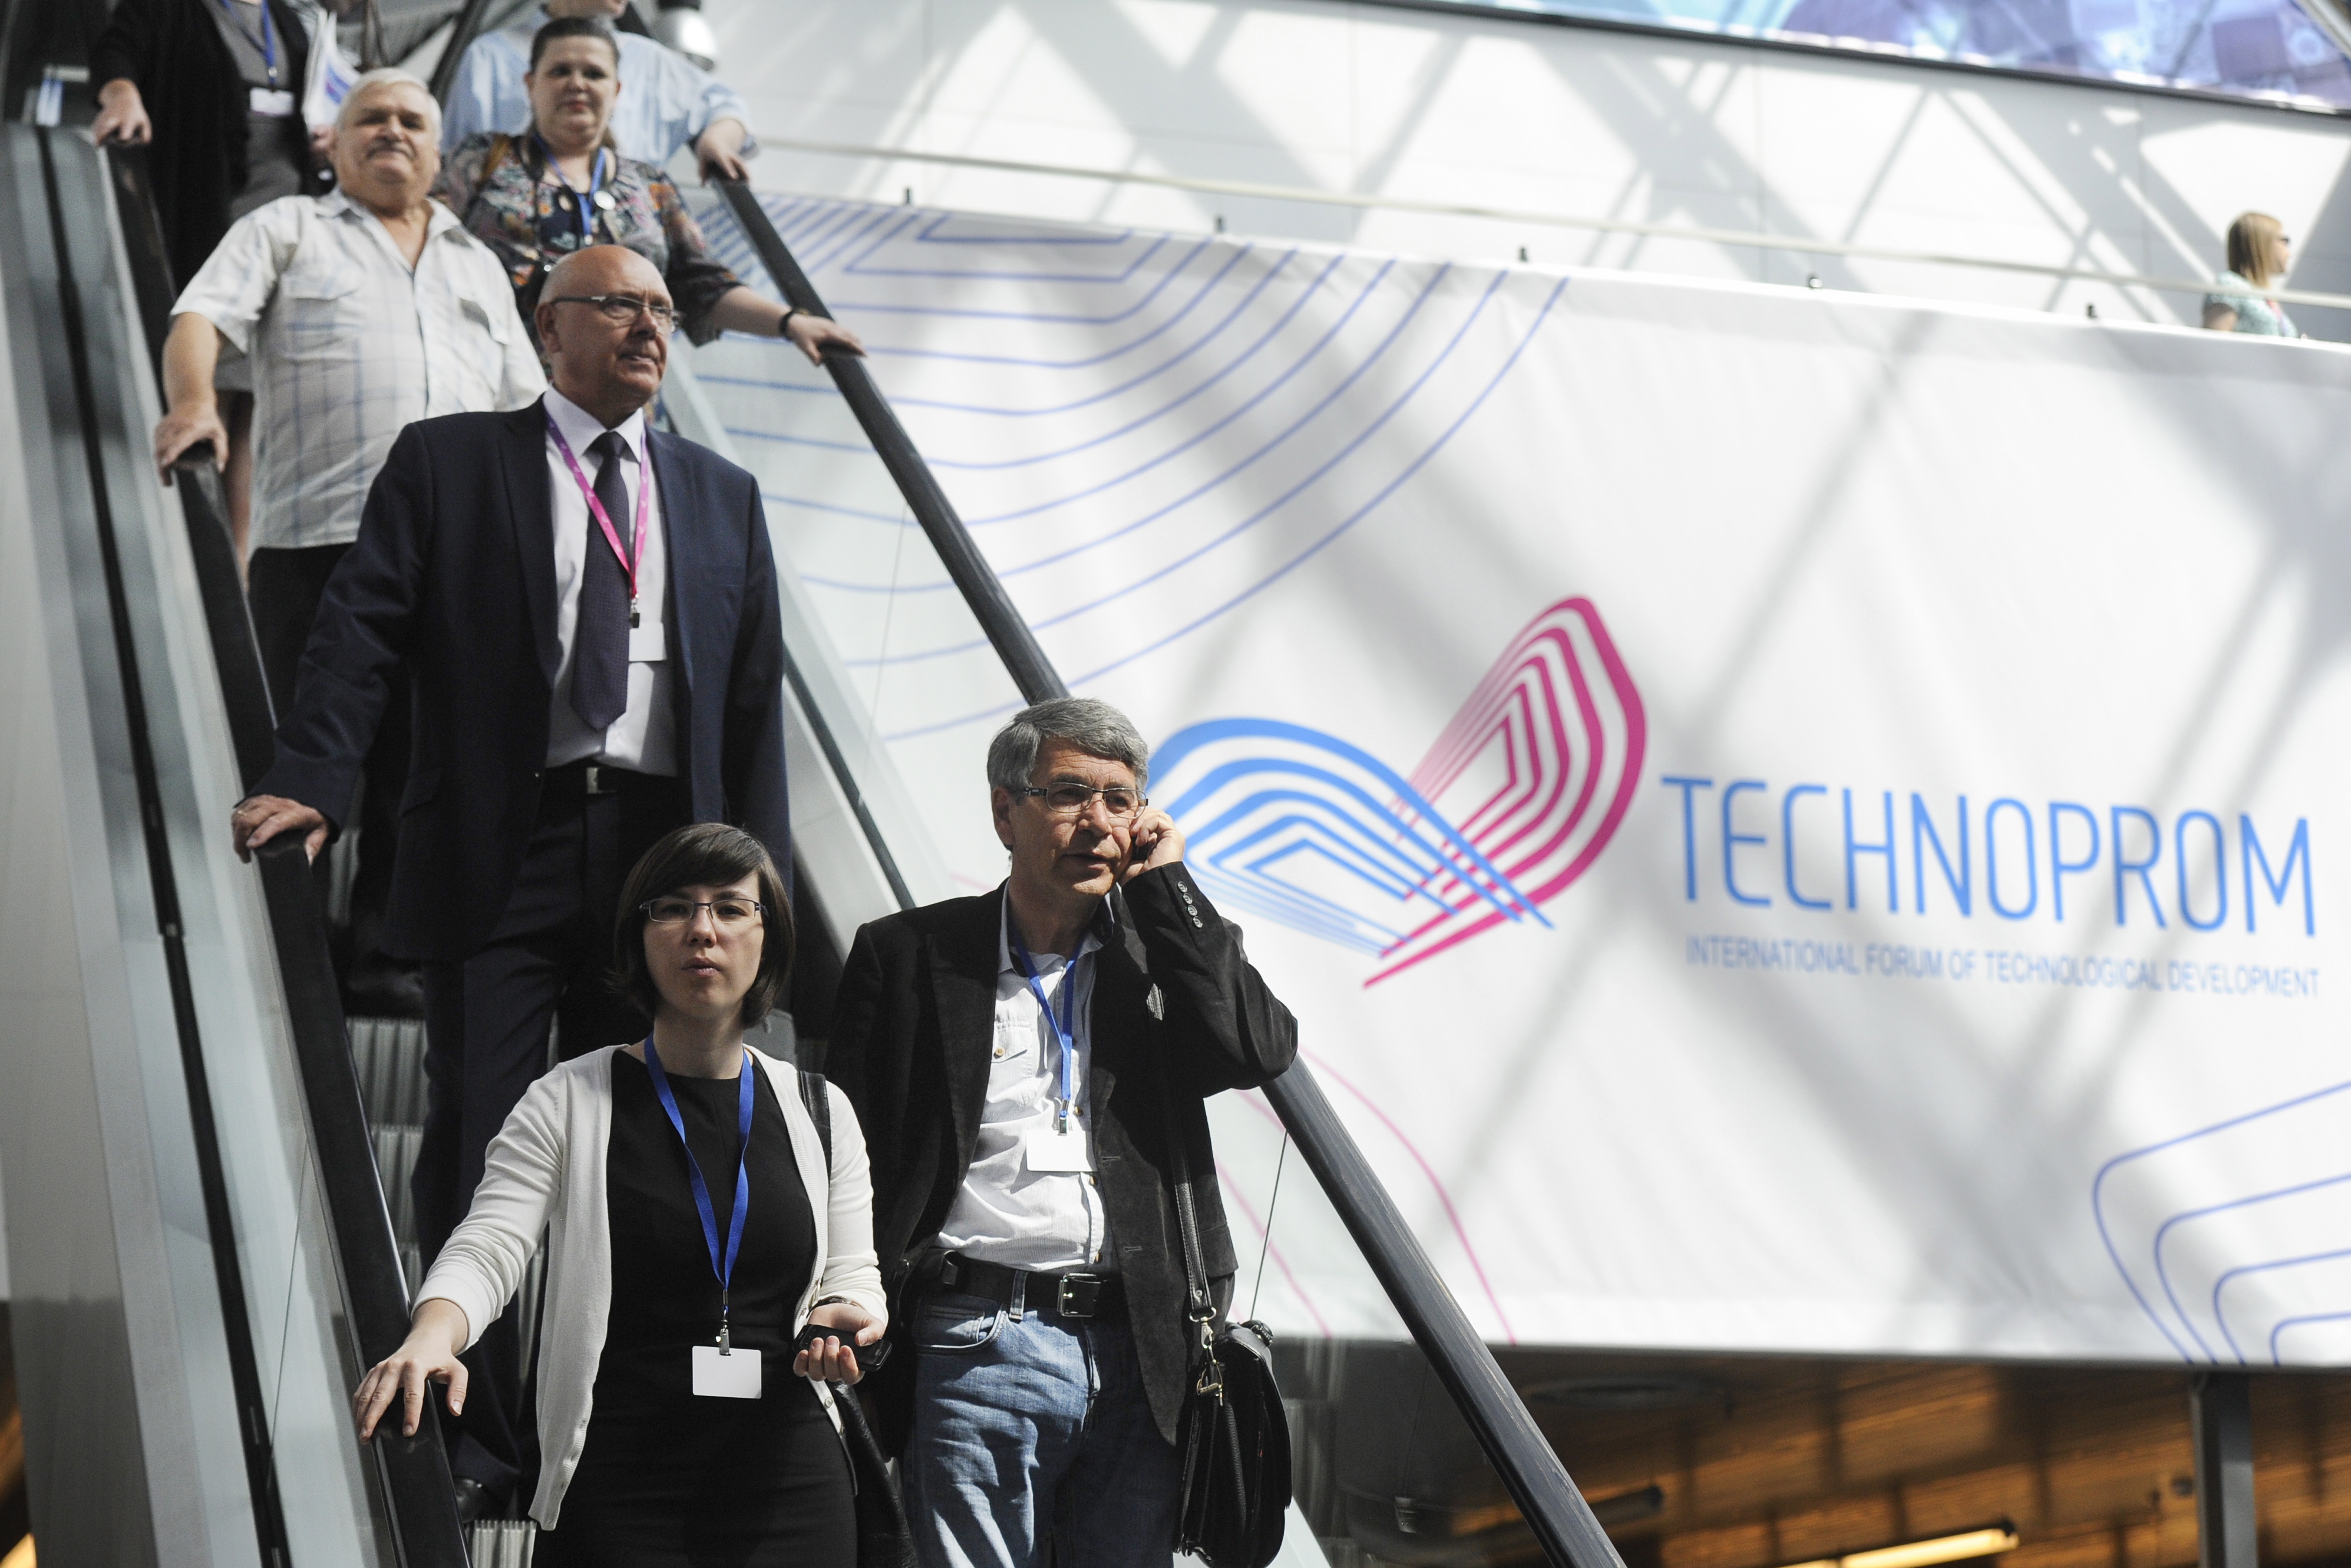 Visitors at the 4th Technoprom International Forum of Technological Development. Source: Kirill Kukhmar/TASS